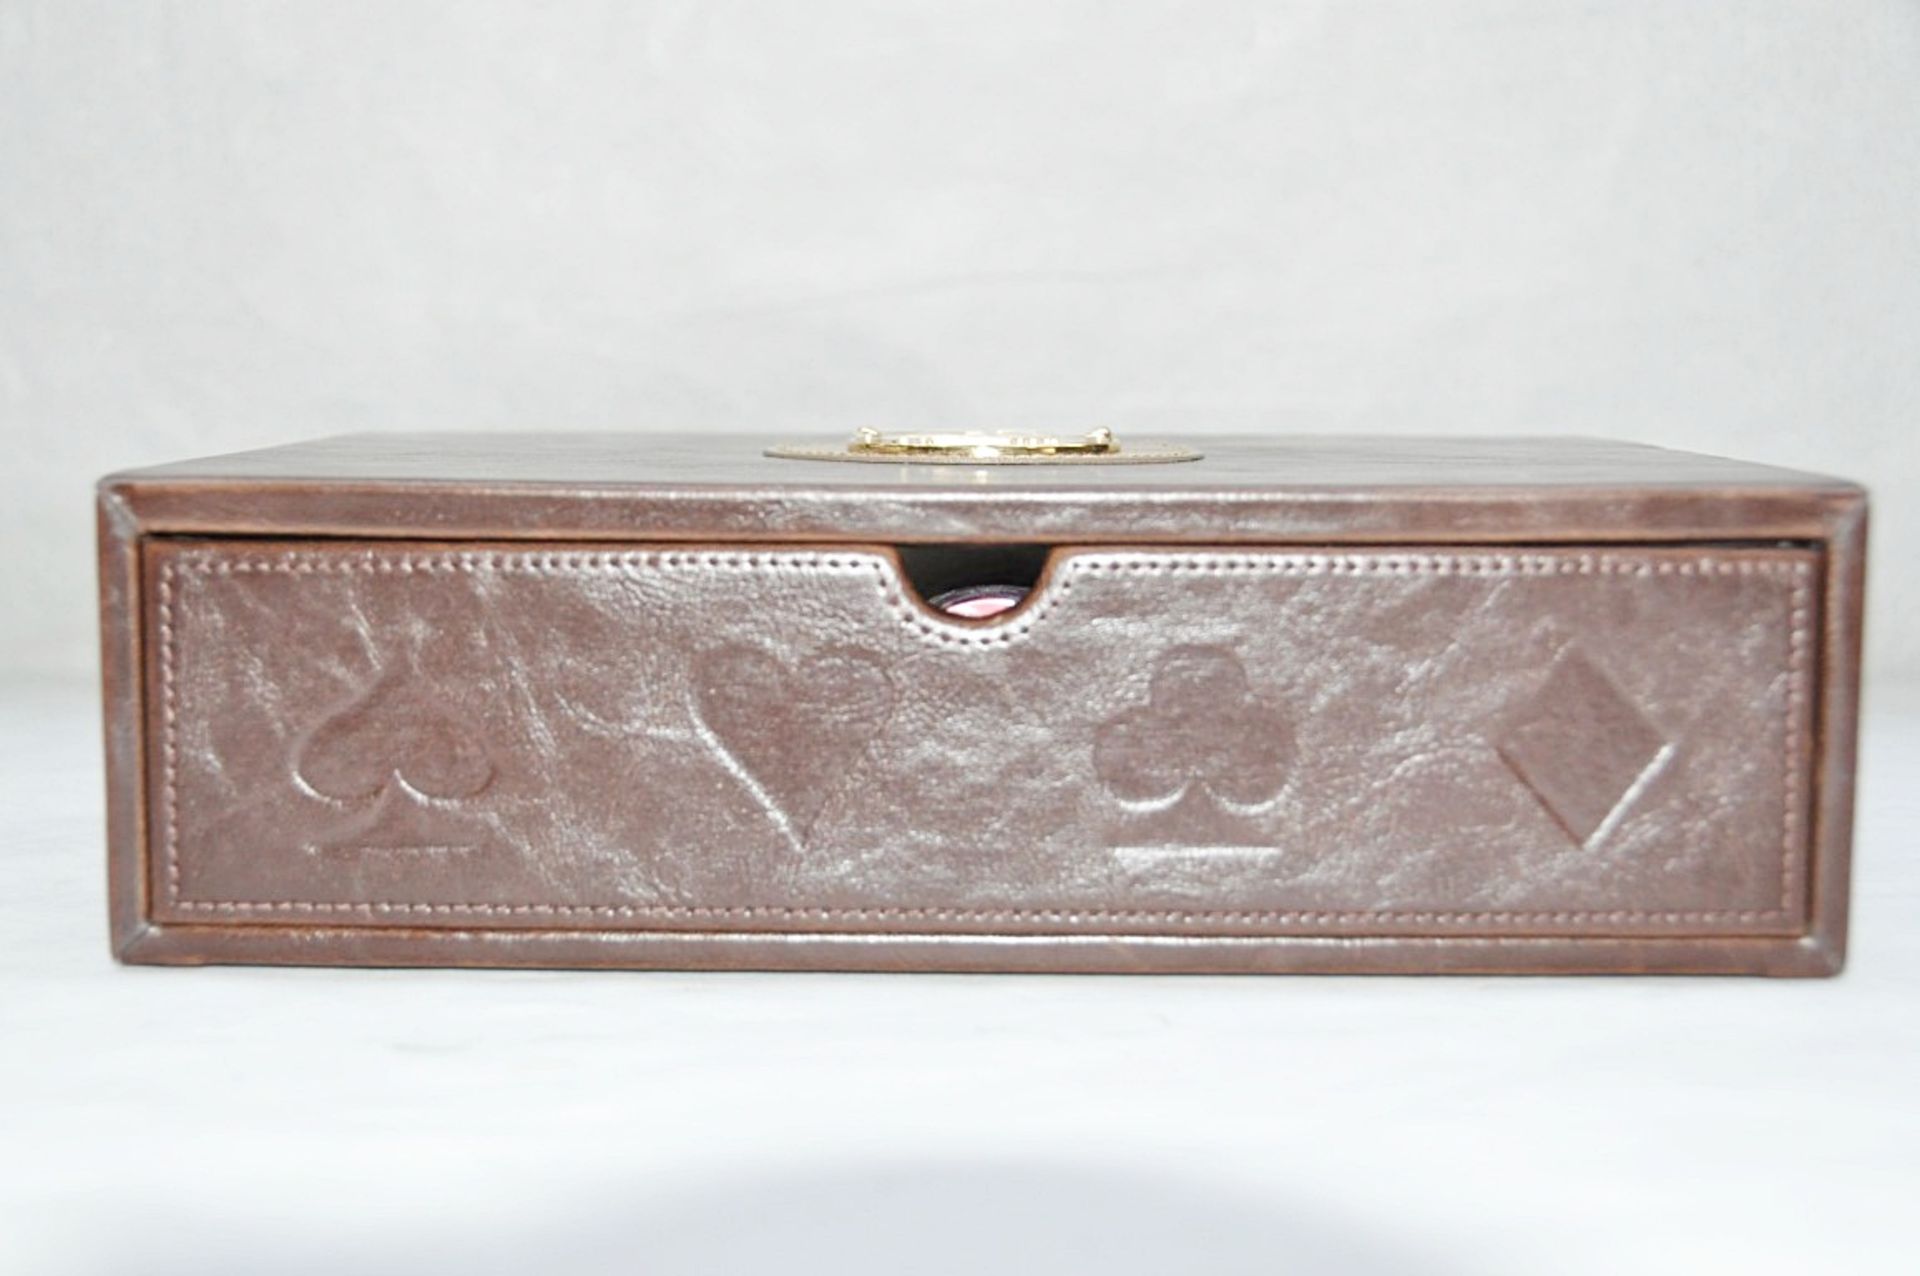 1 x "AB Collezioni" Italian Genuine Leather-Bound Luxury POKER SET (34048) - Ref LT003  - Features - Image 5 of 8